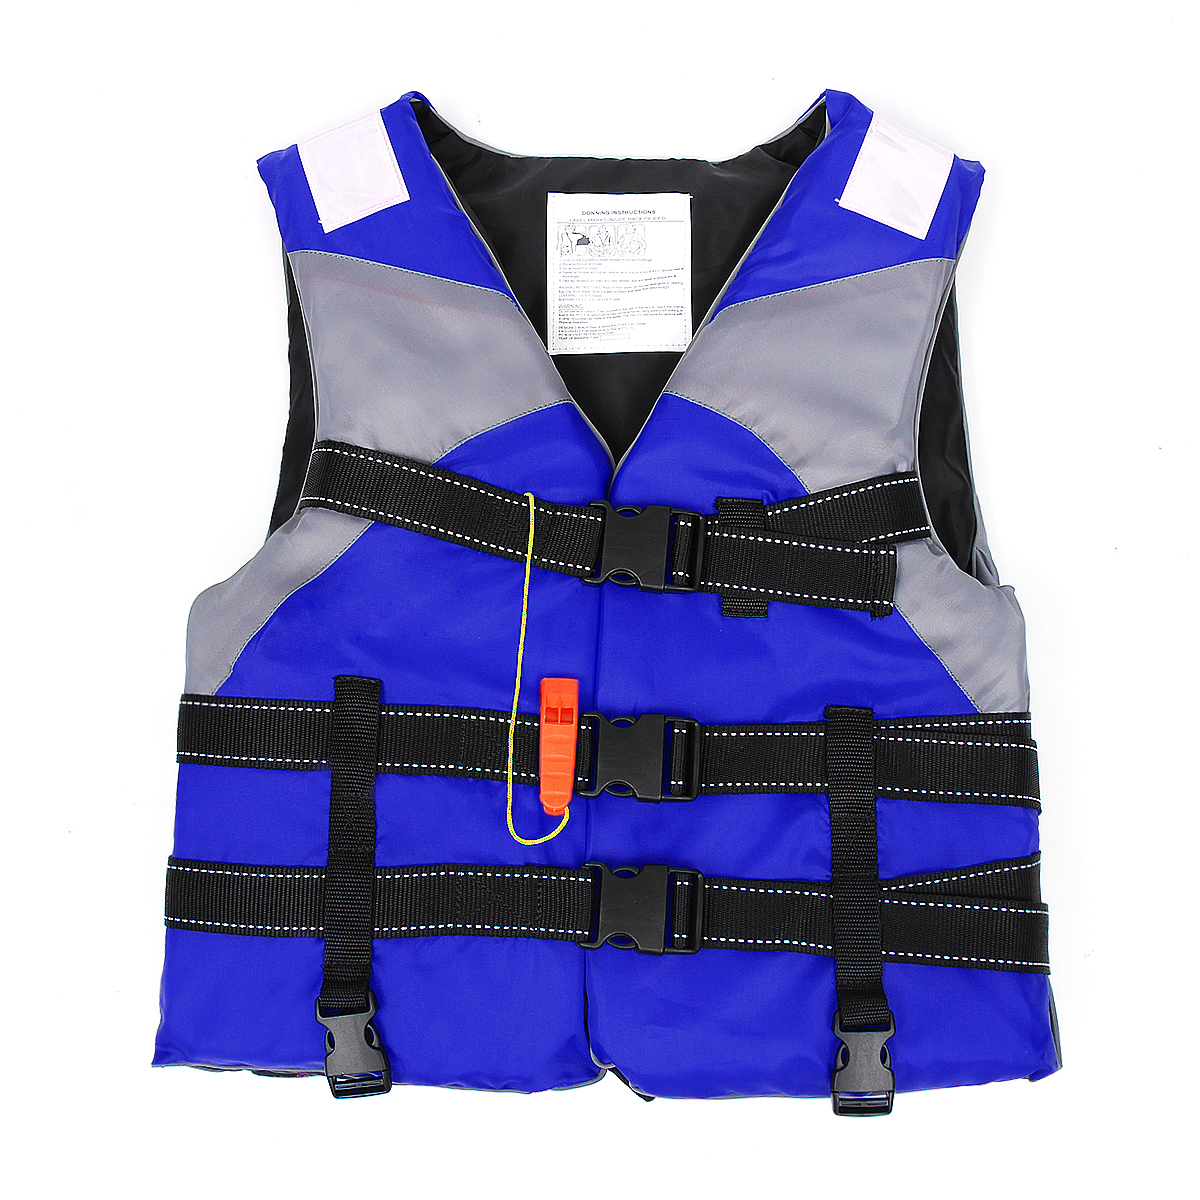 Reflective-Adult-Life-Jacket-Vest-Professional-Fully-Enclosed-Water-Sports-Safty-Aid-Swimwear-Fishin-1640049-7